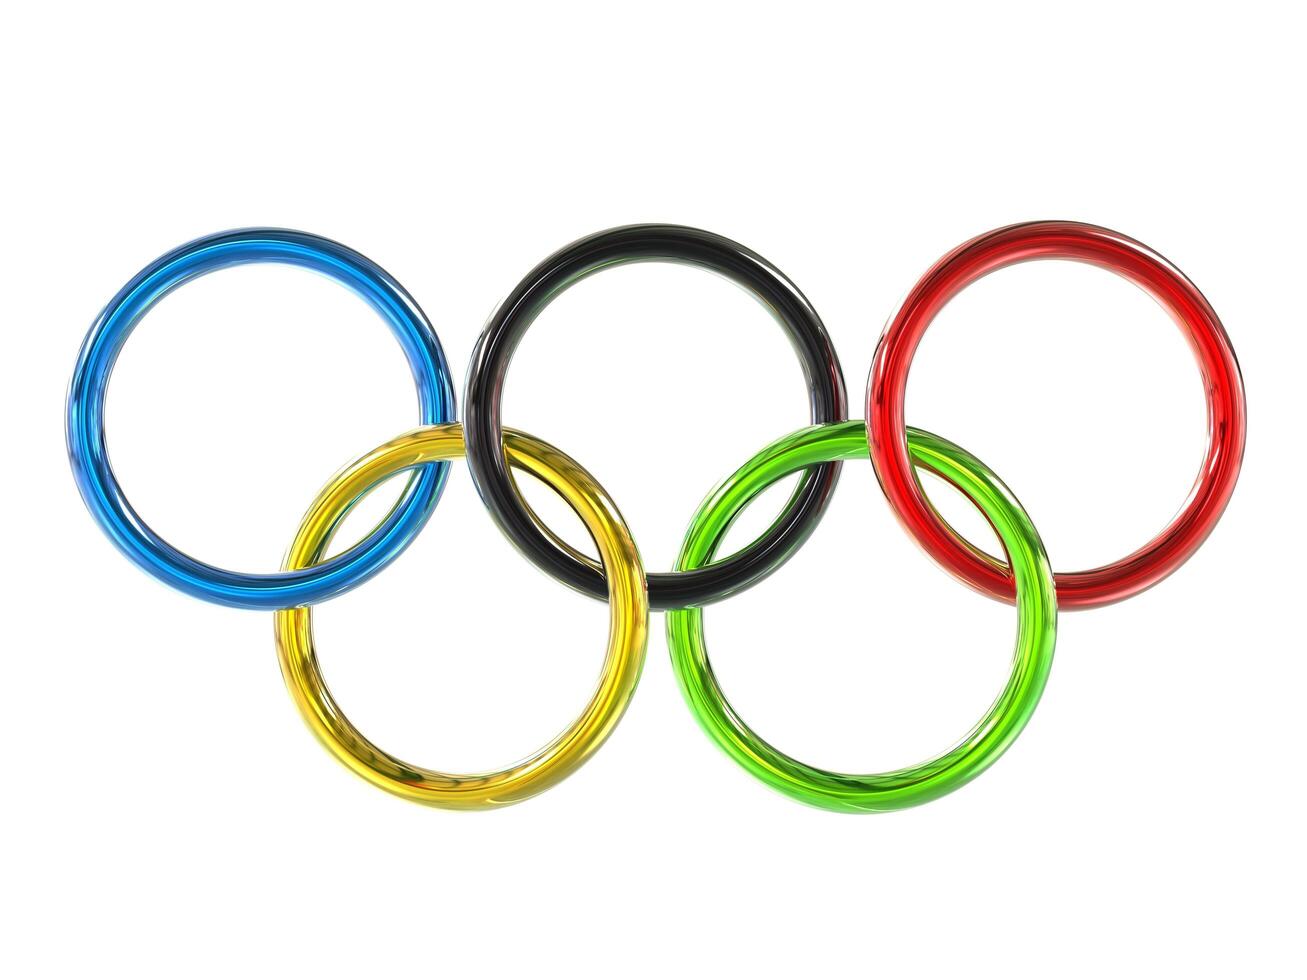 Olympic games rings - chromium metallic photo